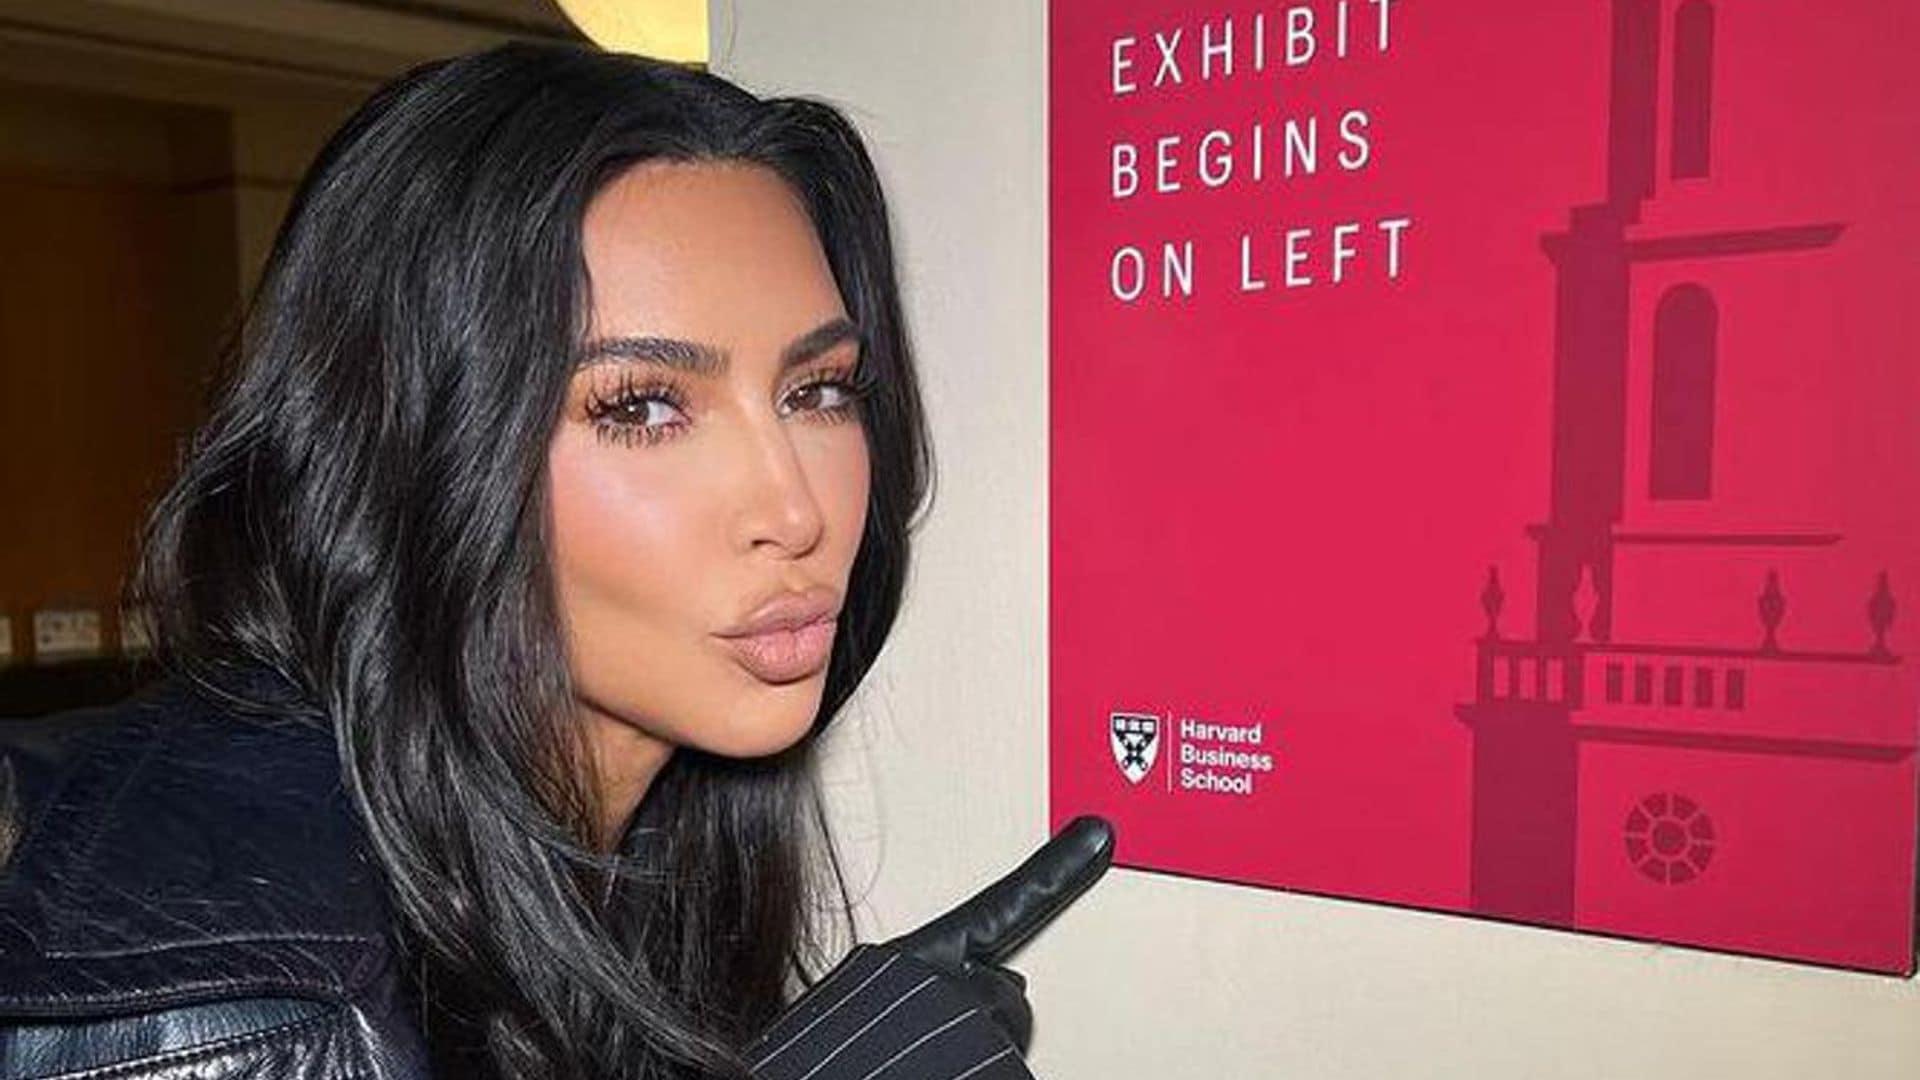 Kim Kardashian says speaking at Harvard Business School was on her bucket list